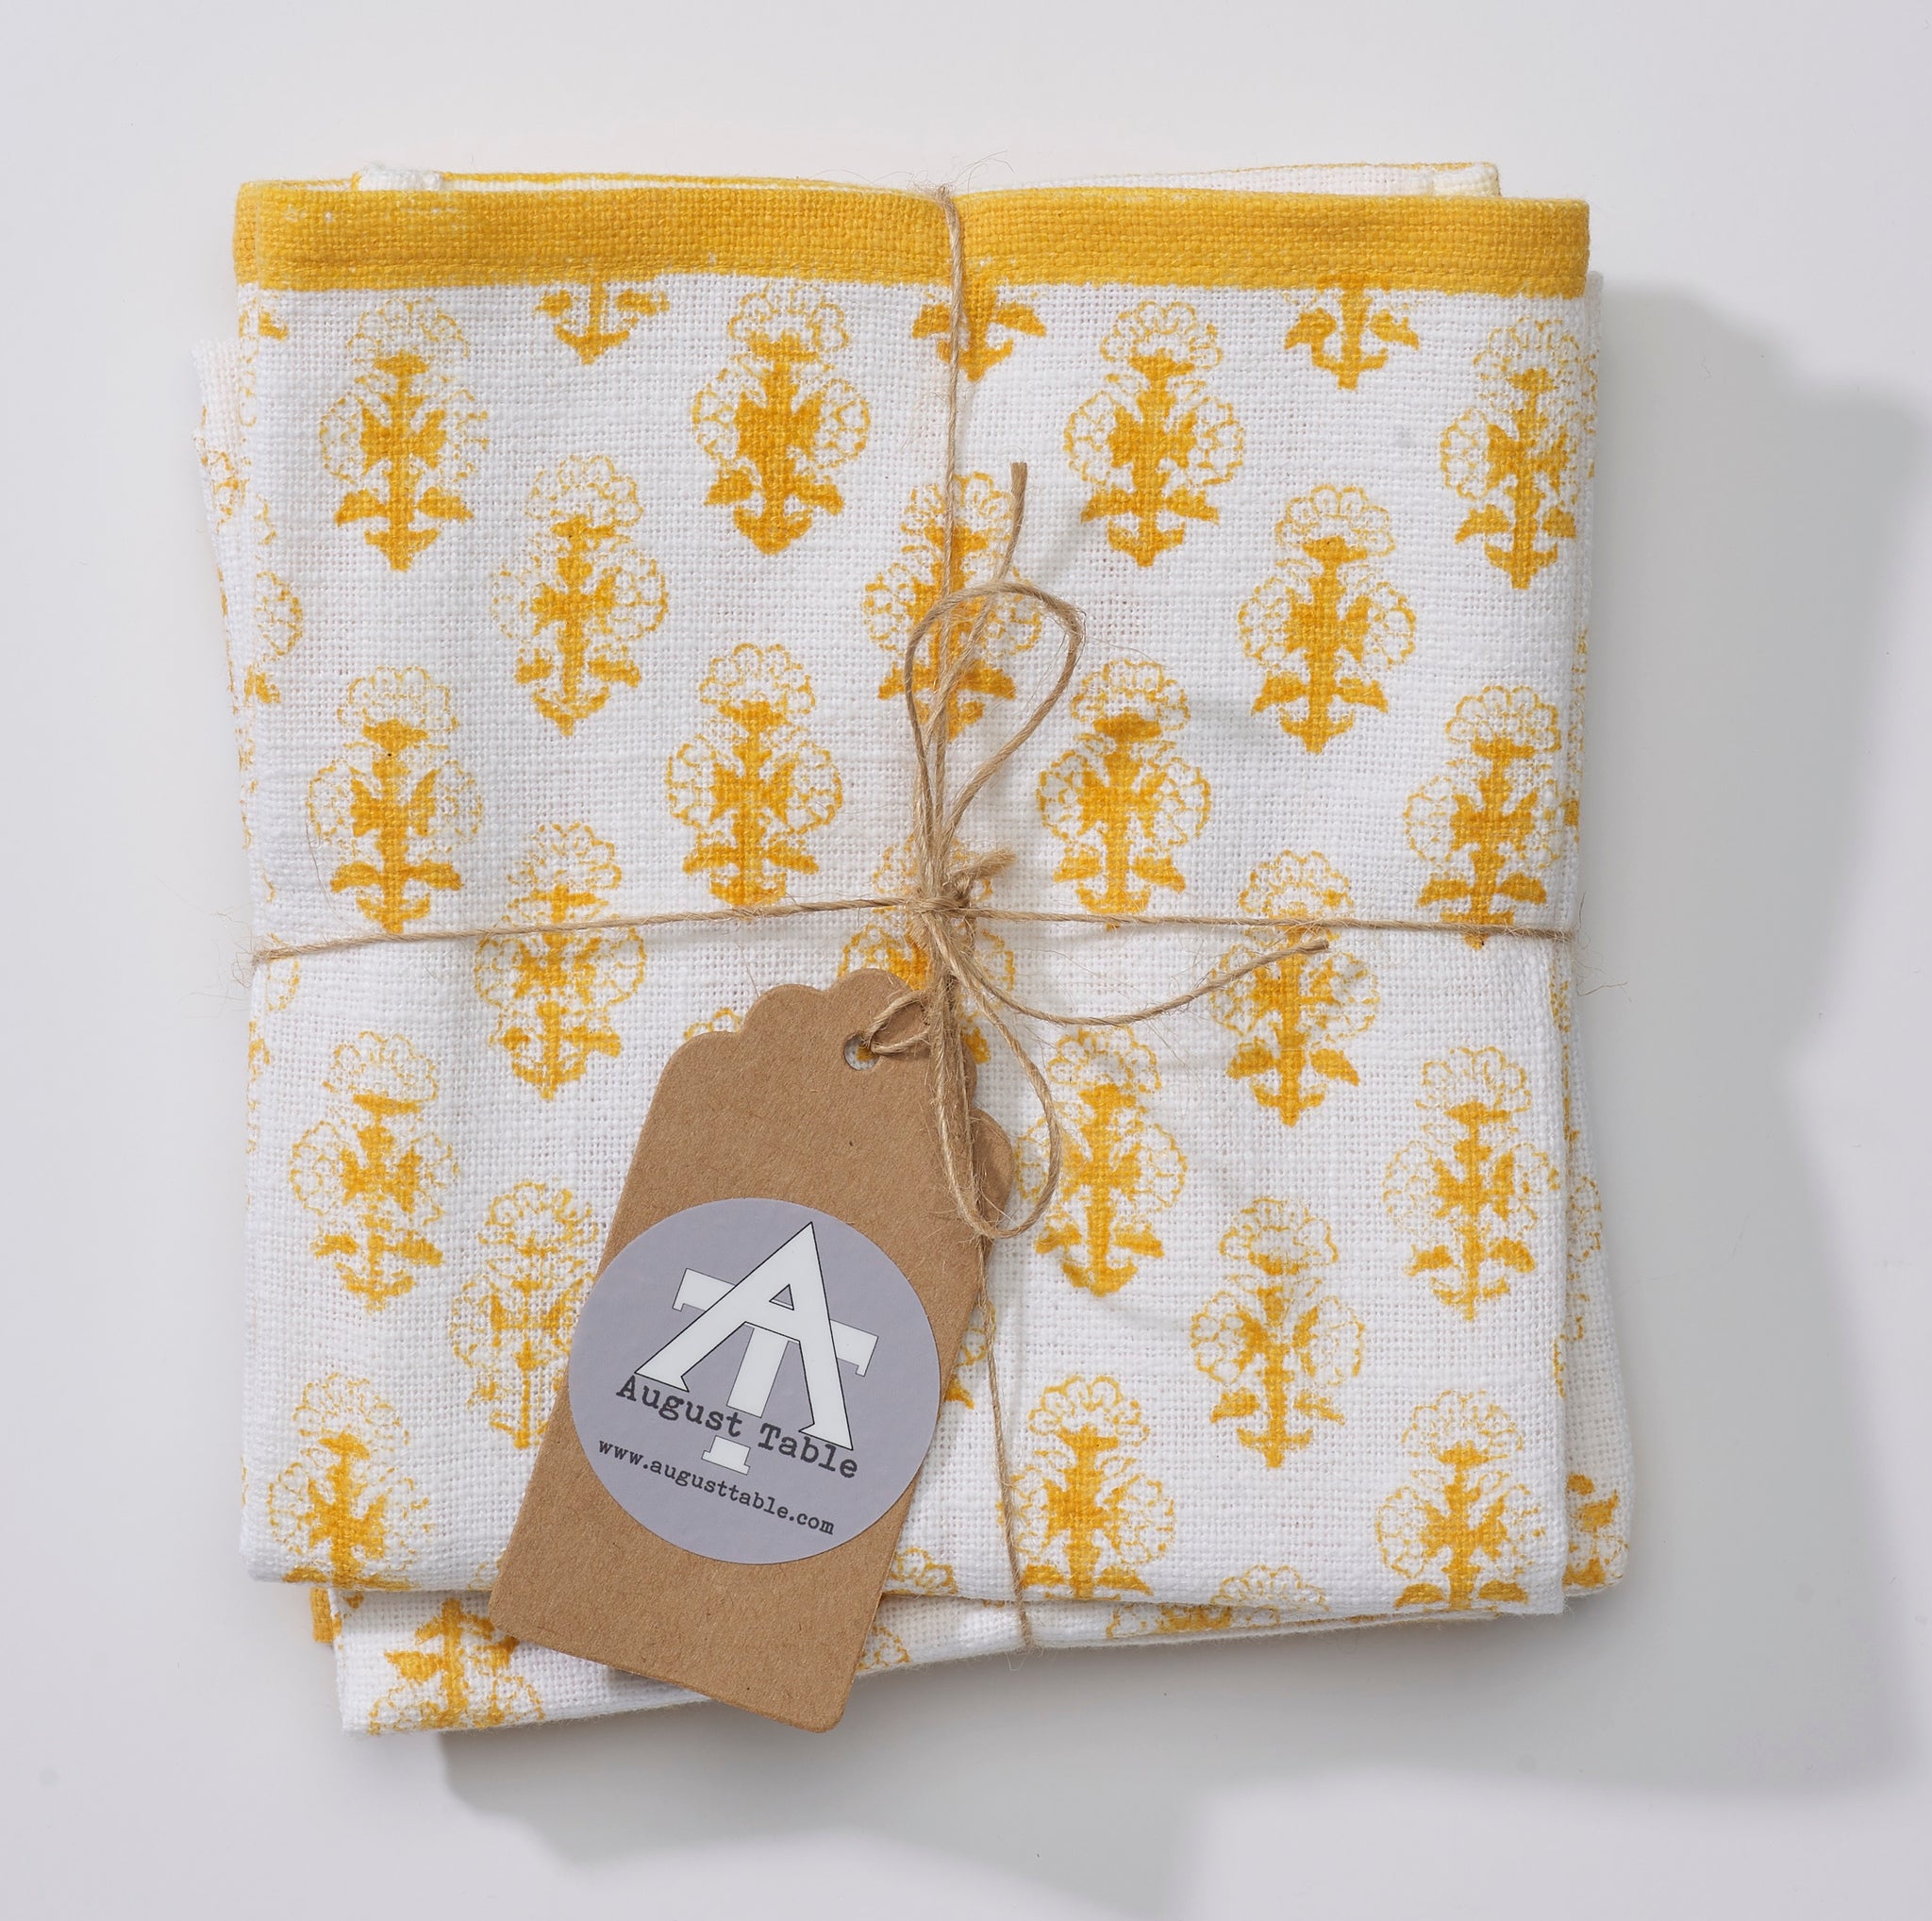 Zulay Kitchen Absorbent Kitchen Towels Cotton - Yellow, 8 - Harris